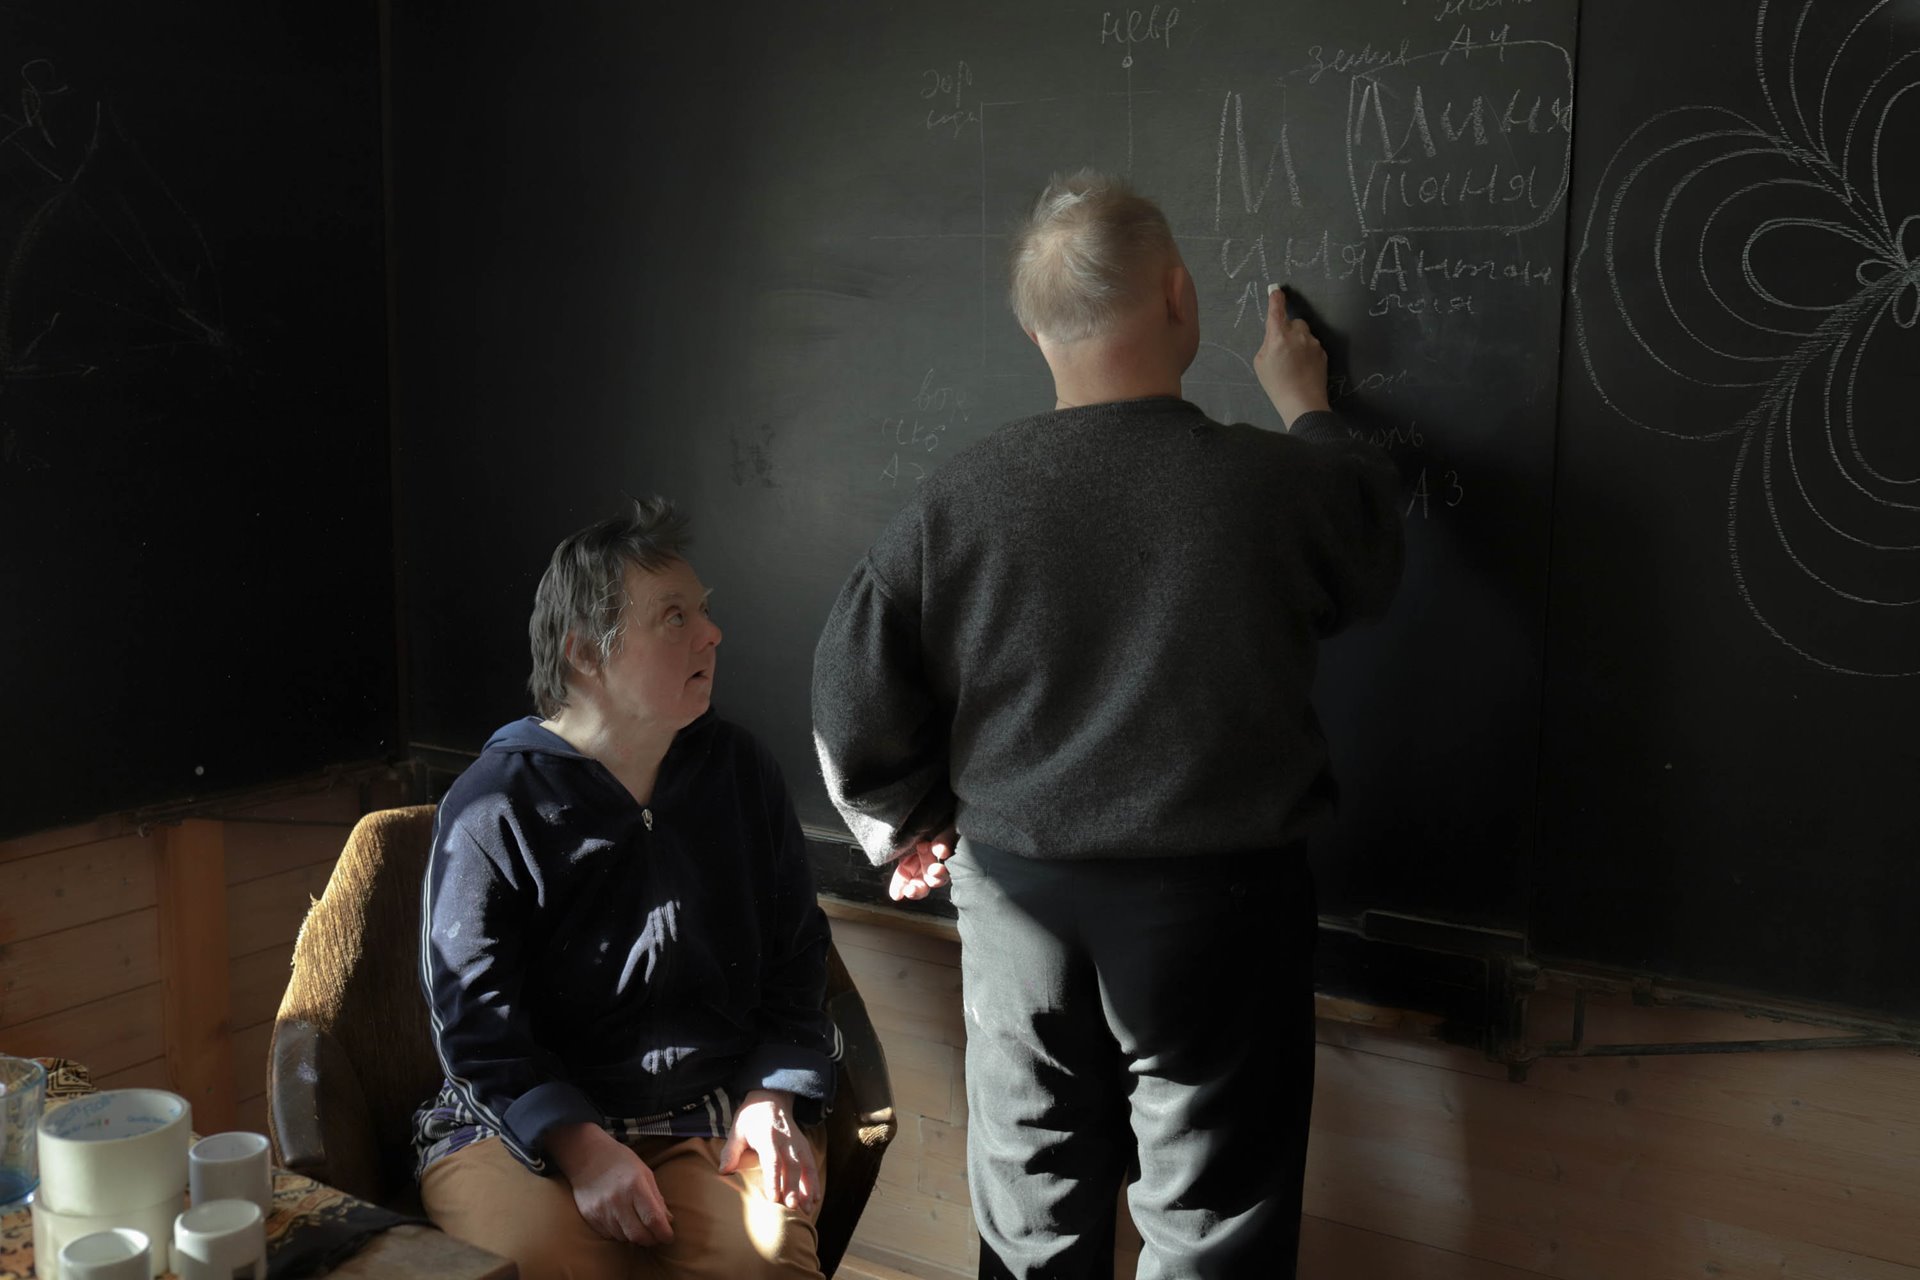 Minya writes on the blackboard in the village study room, while Tatyana looks on.